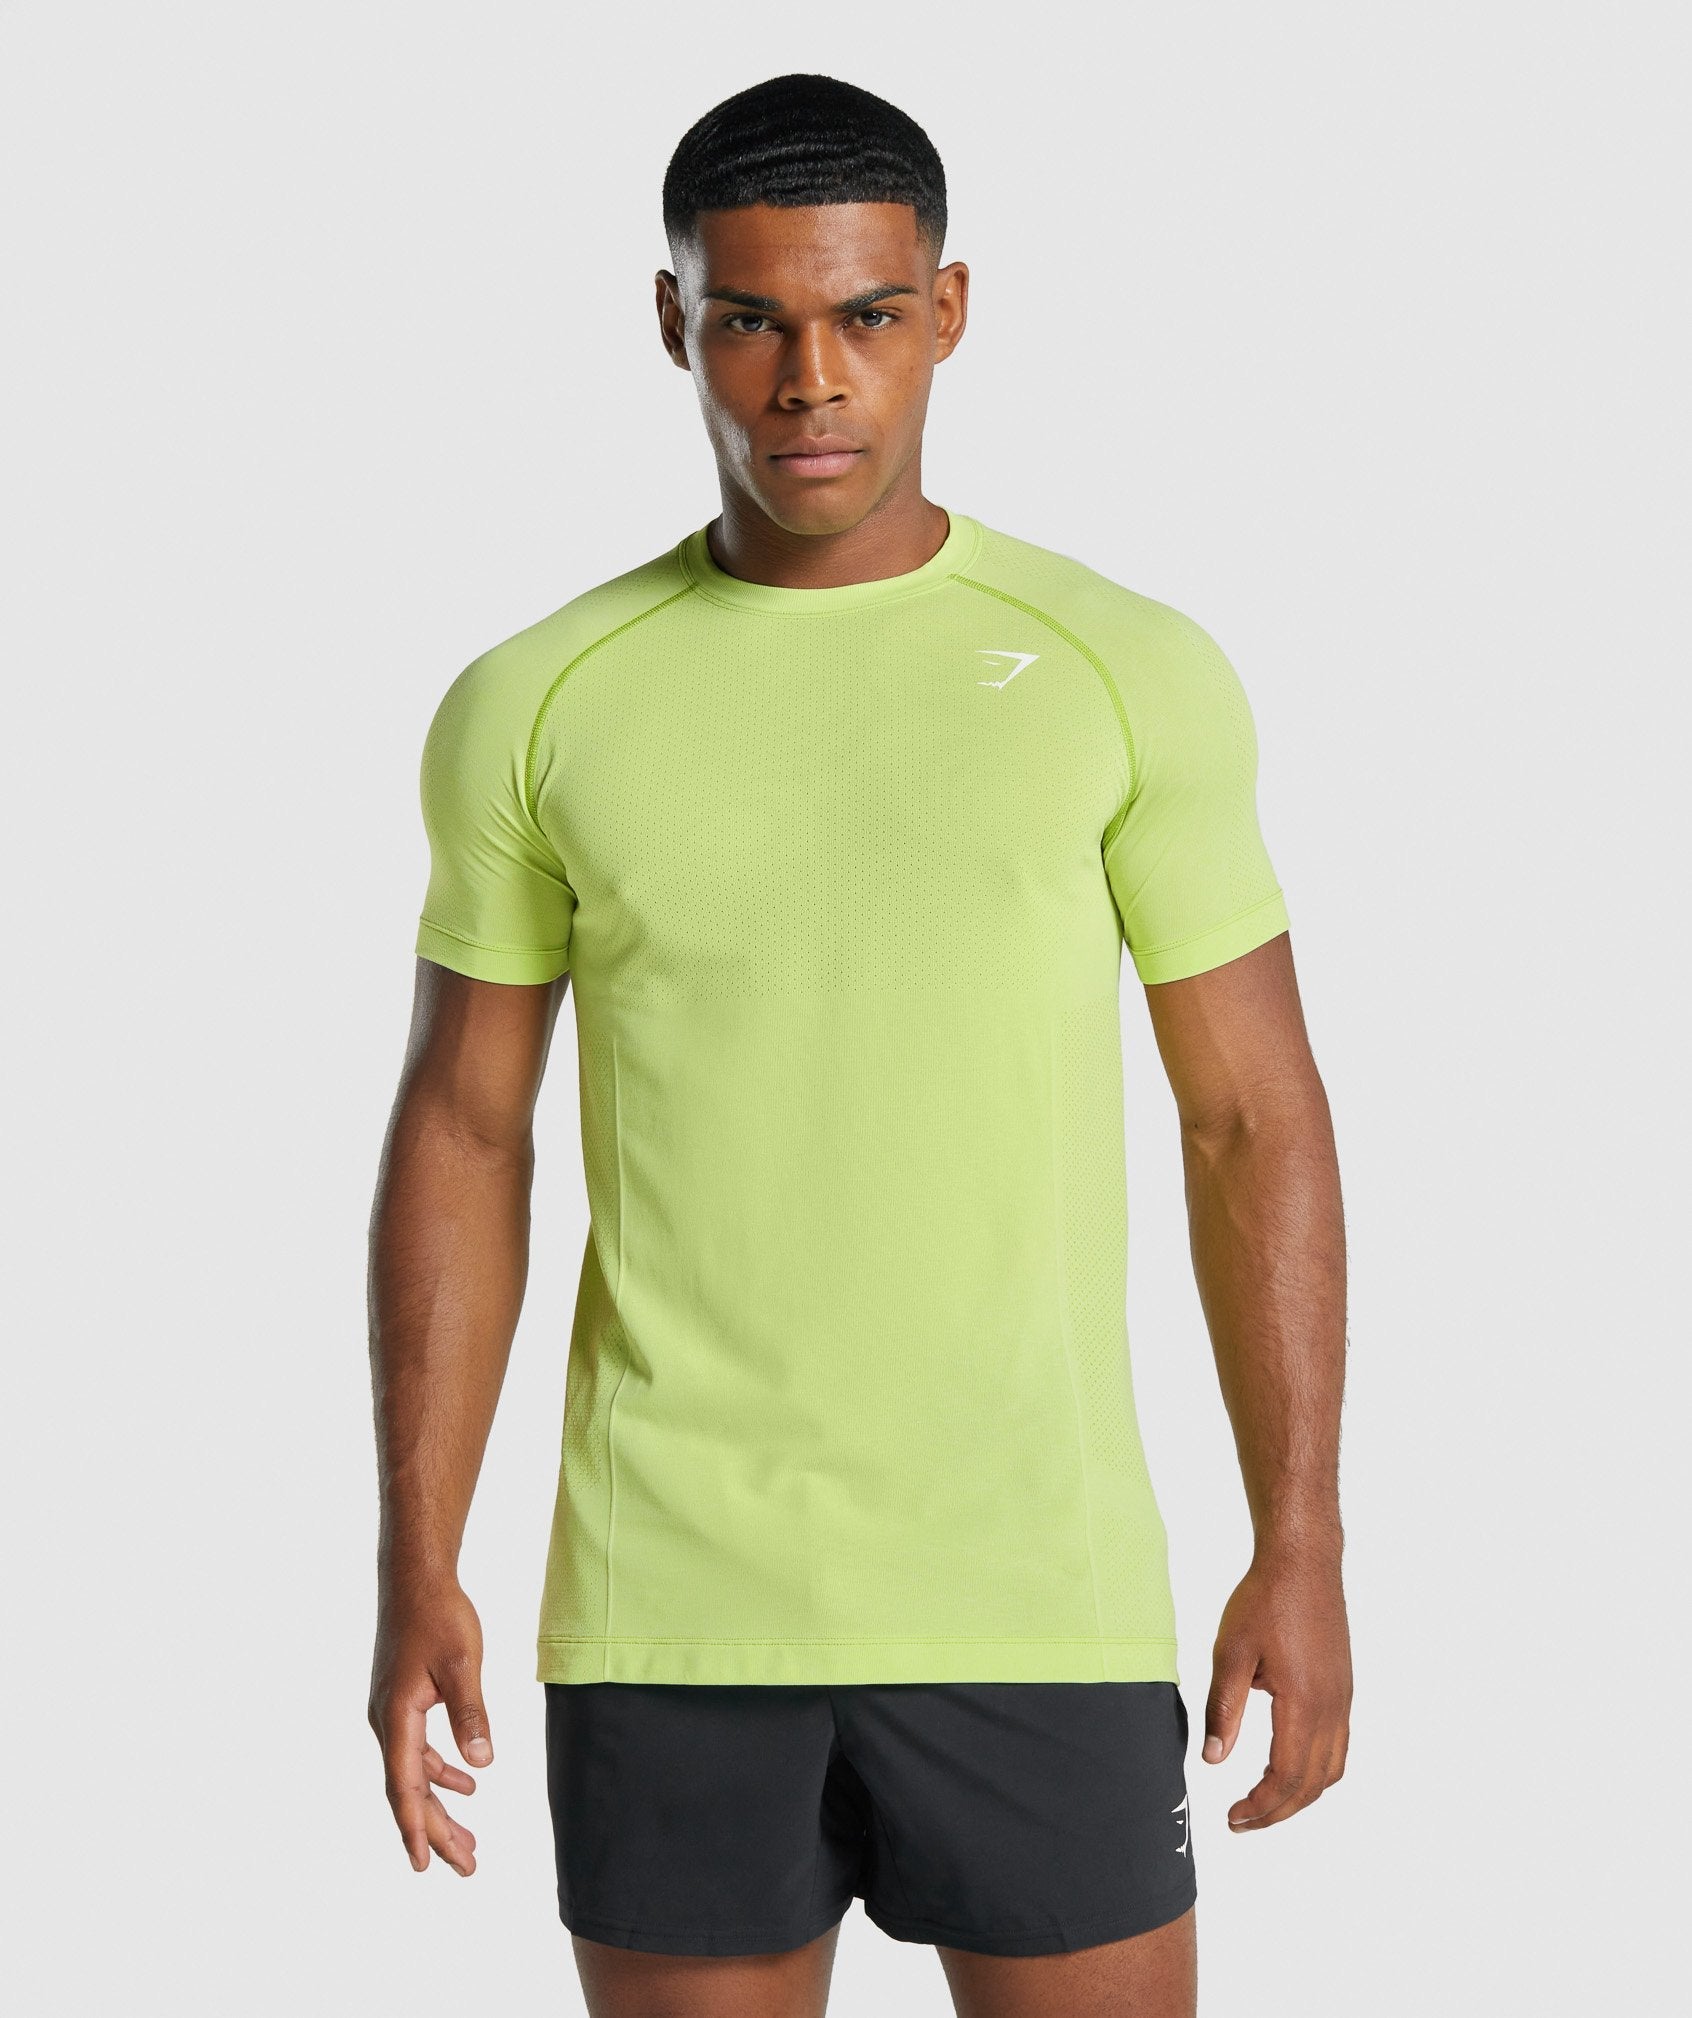 Vital Light seamless T-Shirt in Yellow Marl - view 1